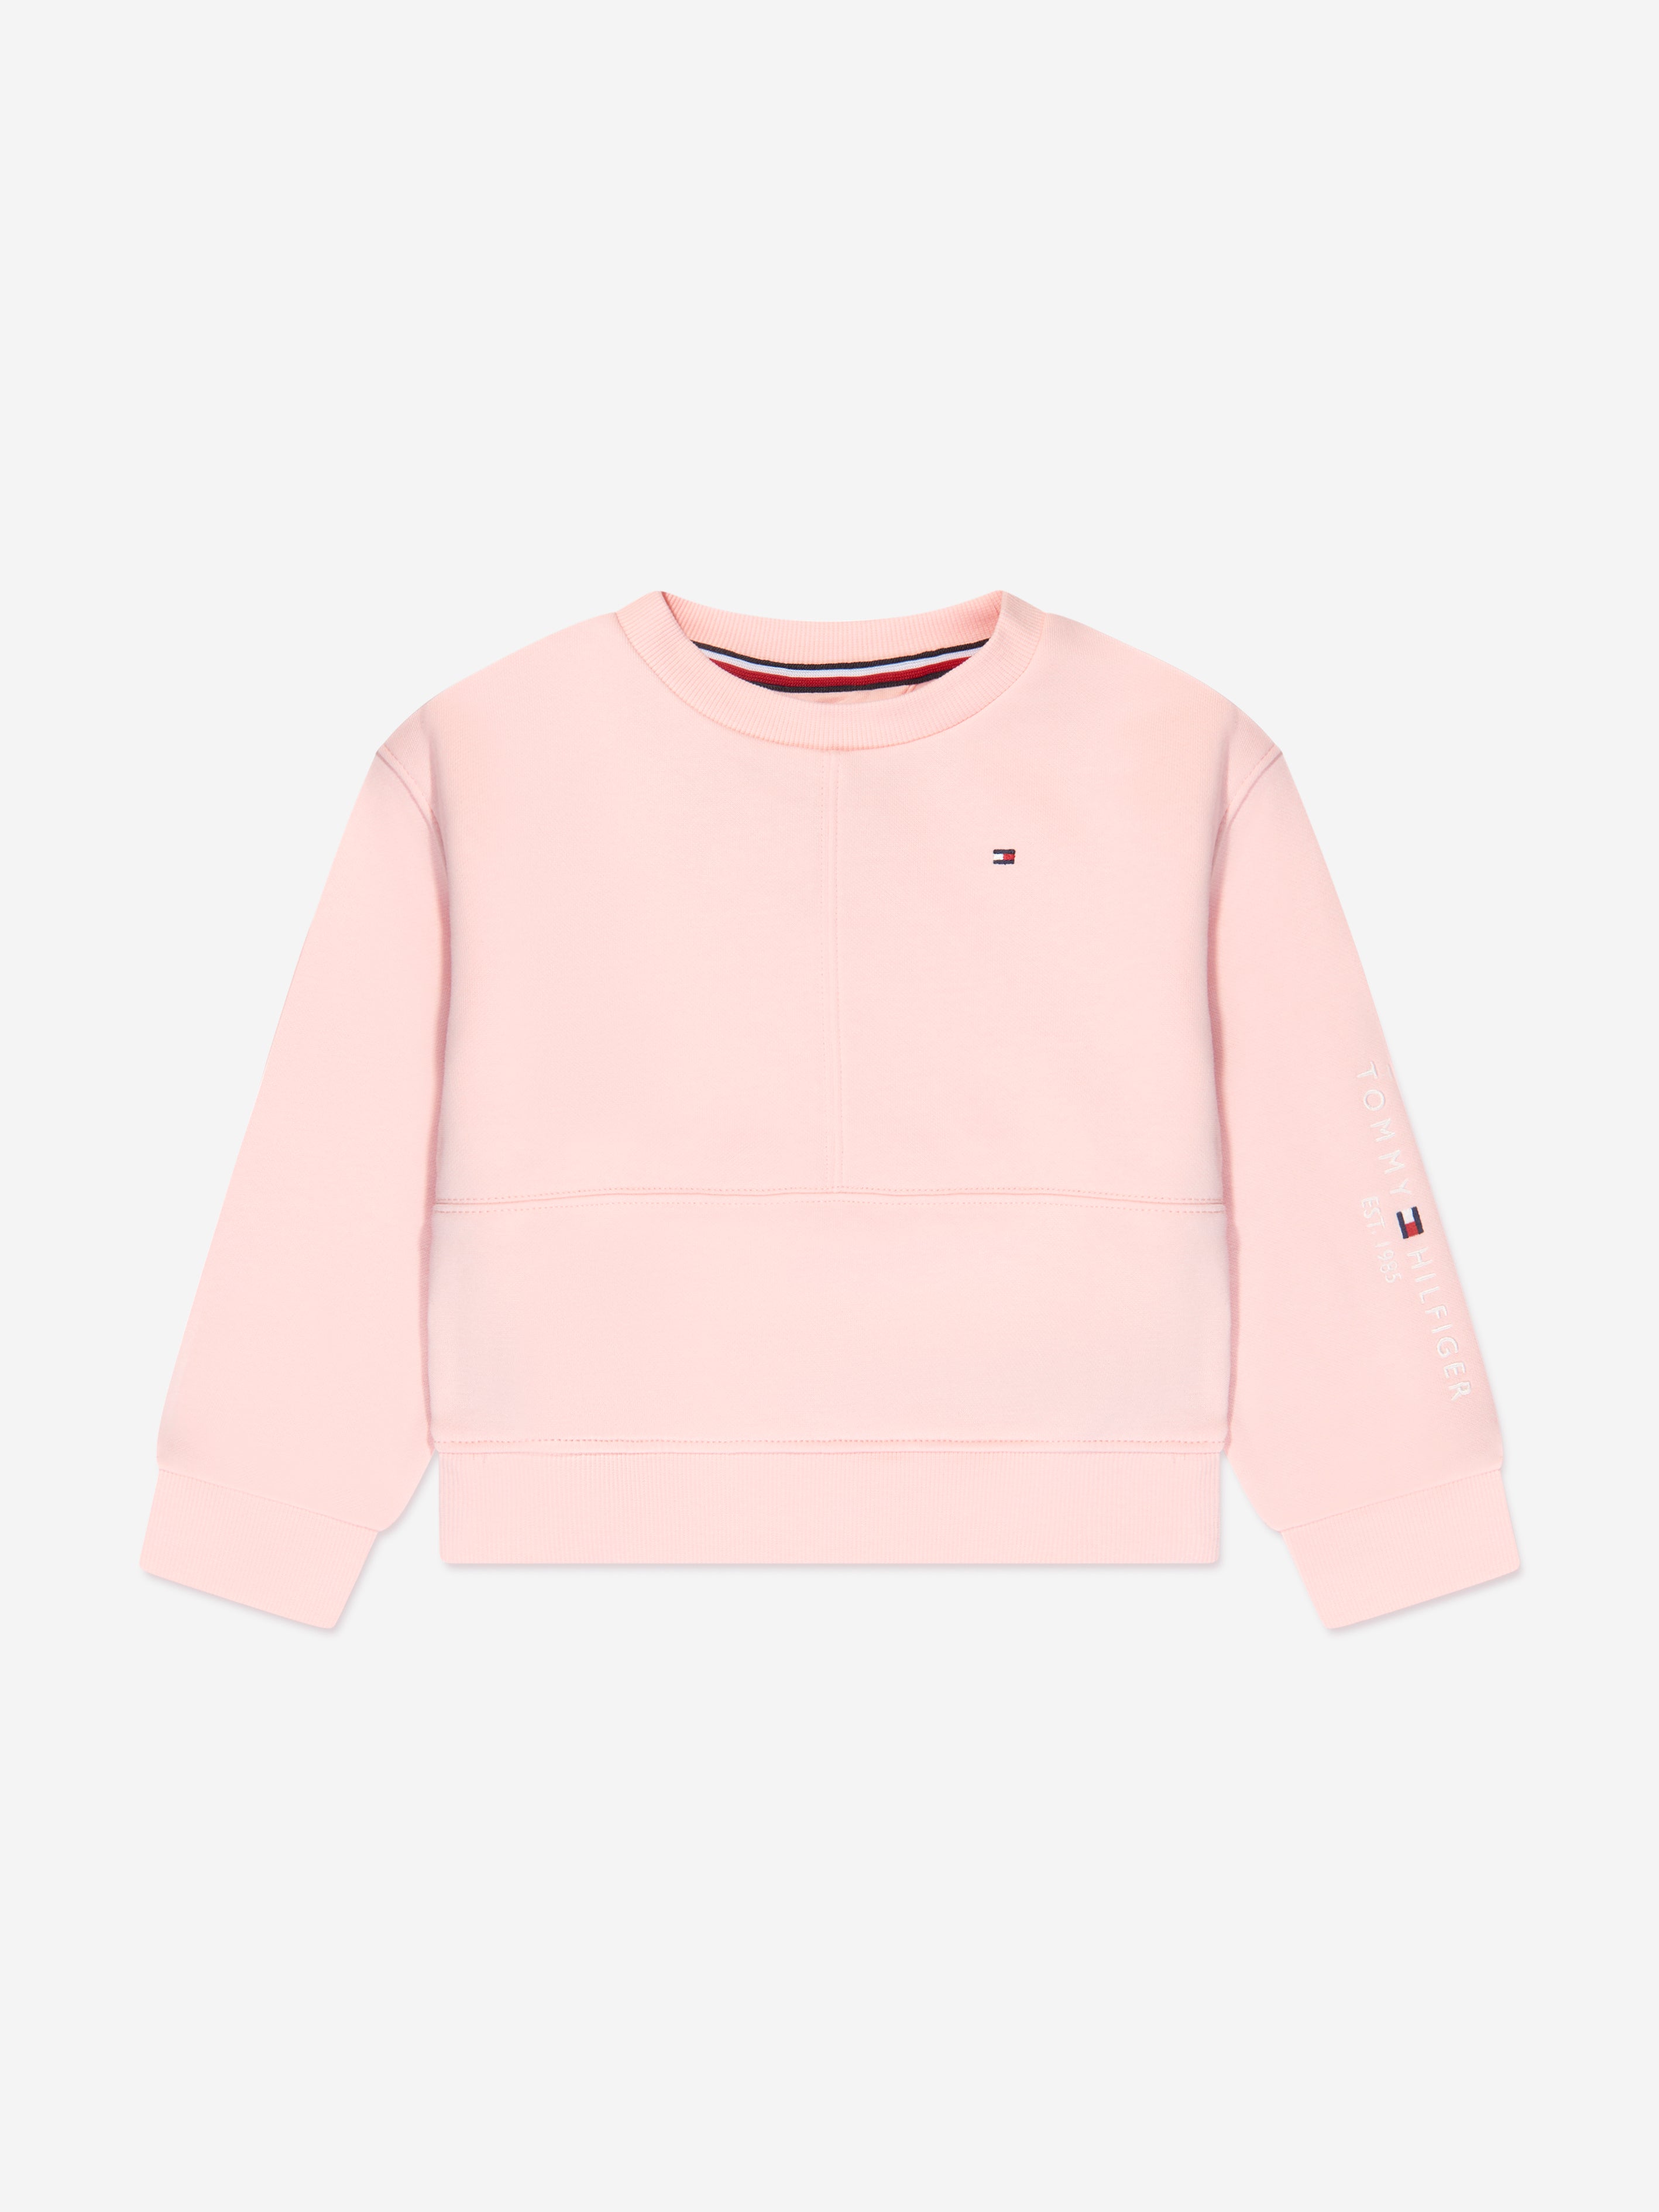 Childsplay | Sweatshirt in Clothing Girls Essential Pink